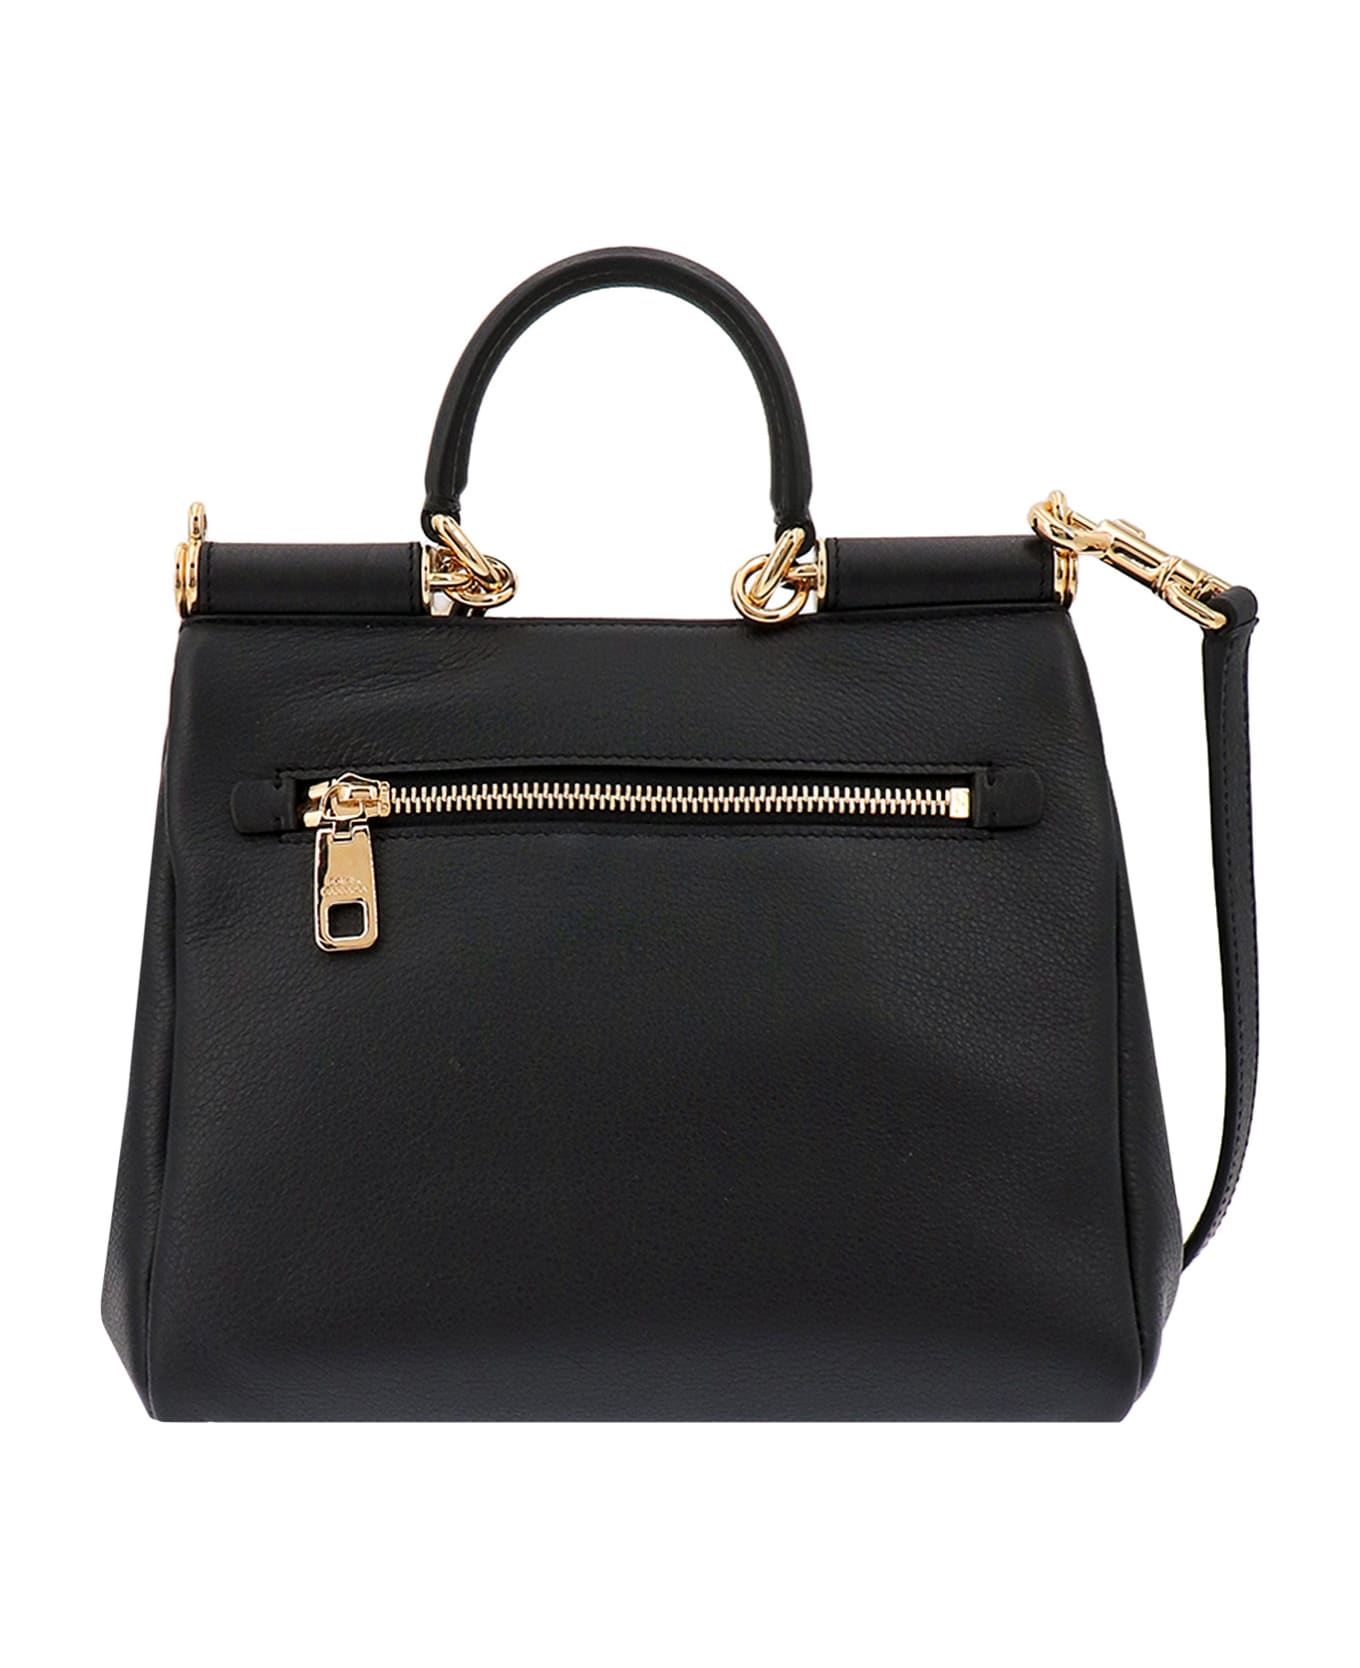 Dolce & Gabbana Handbag - Nero